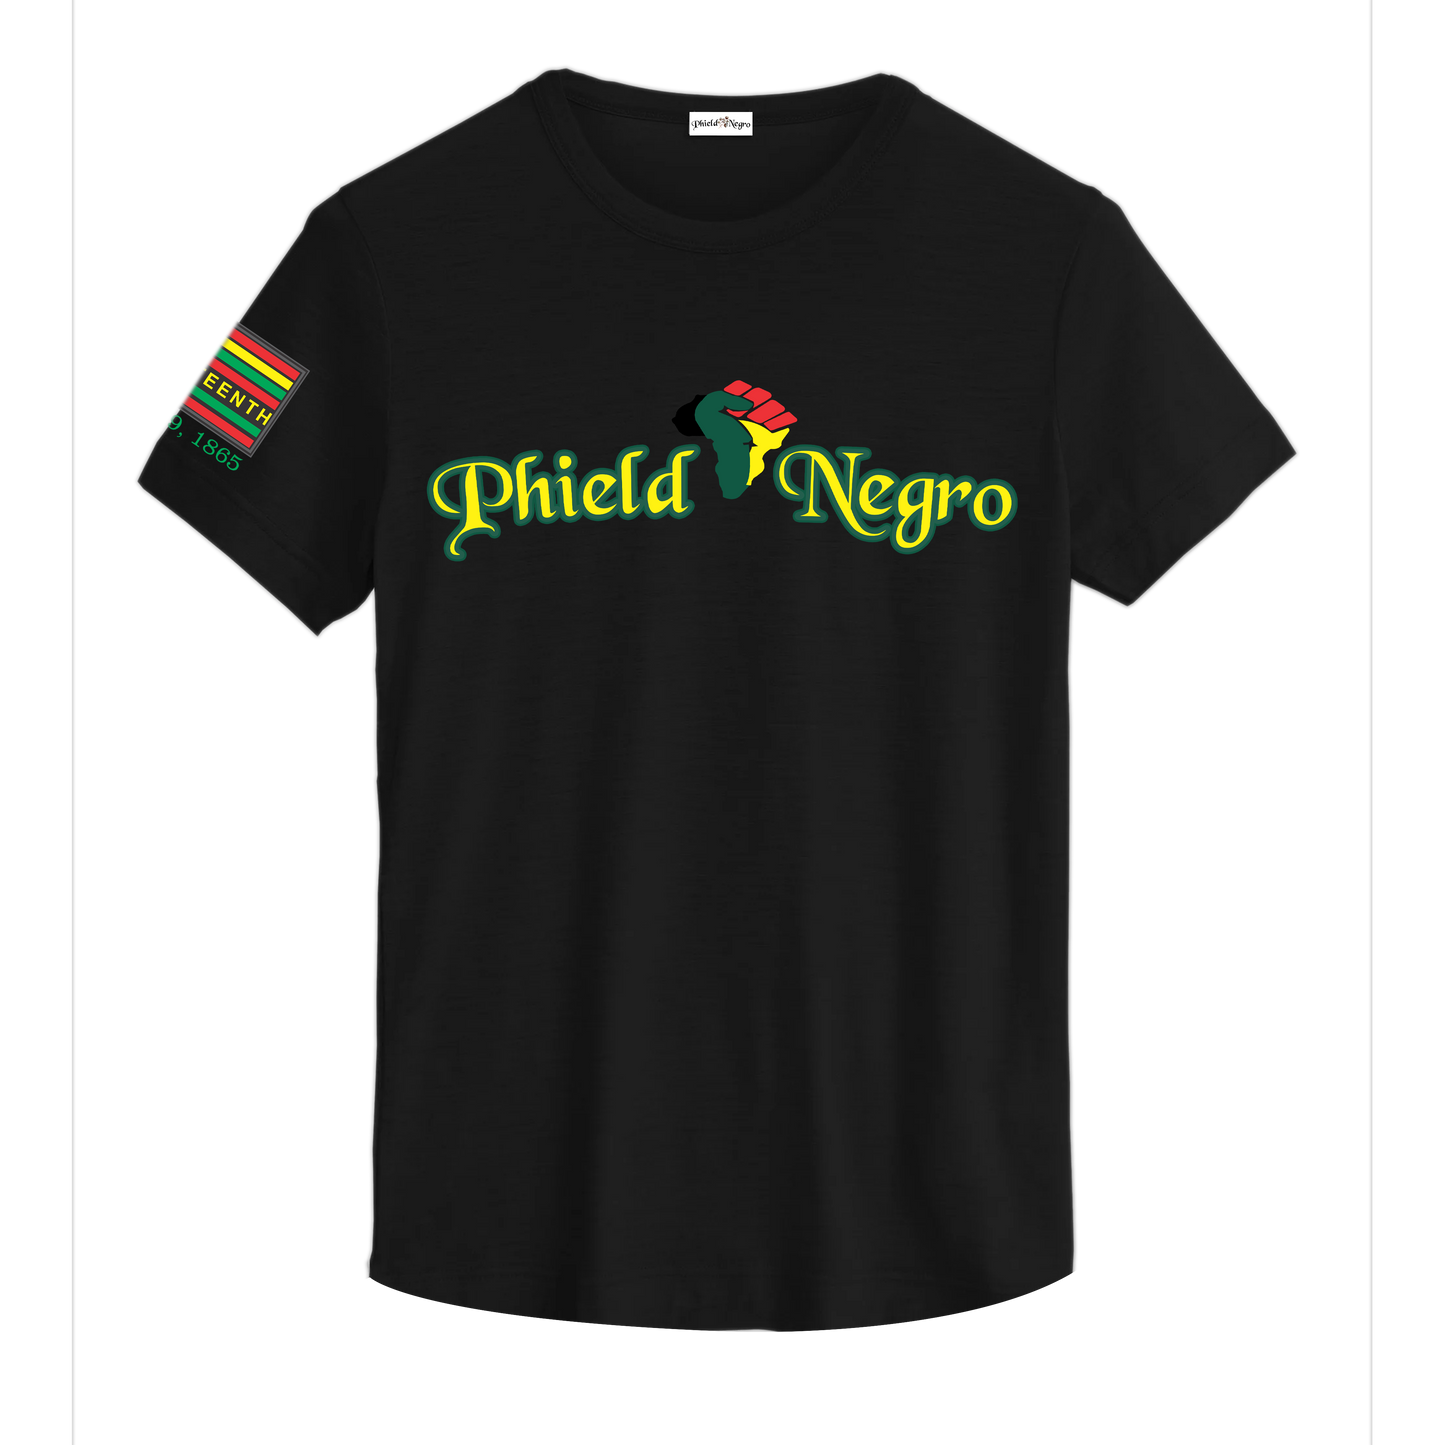 Juneteenth Tee Shirt  - Premium Phield Negro - Juneteenth Edition Black